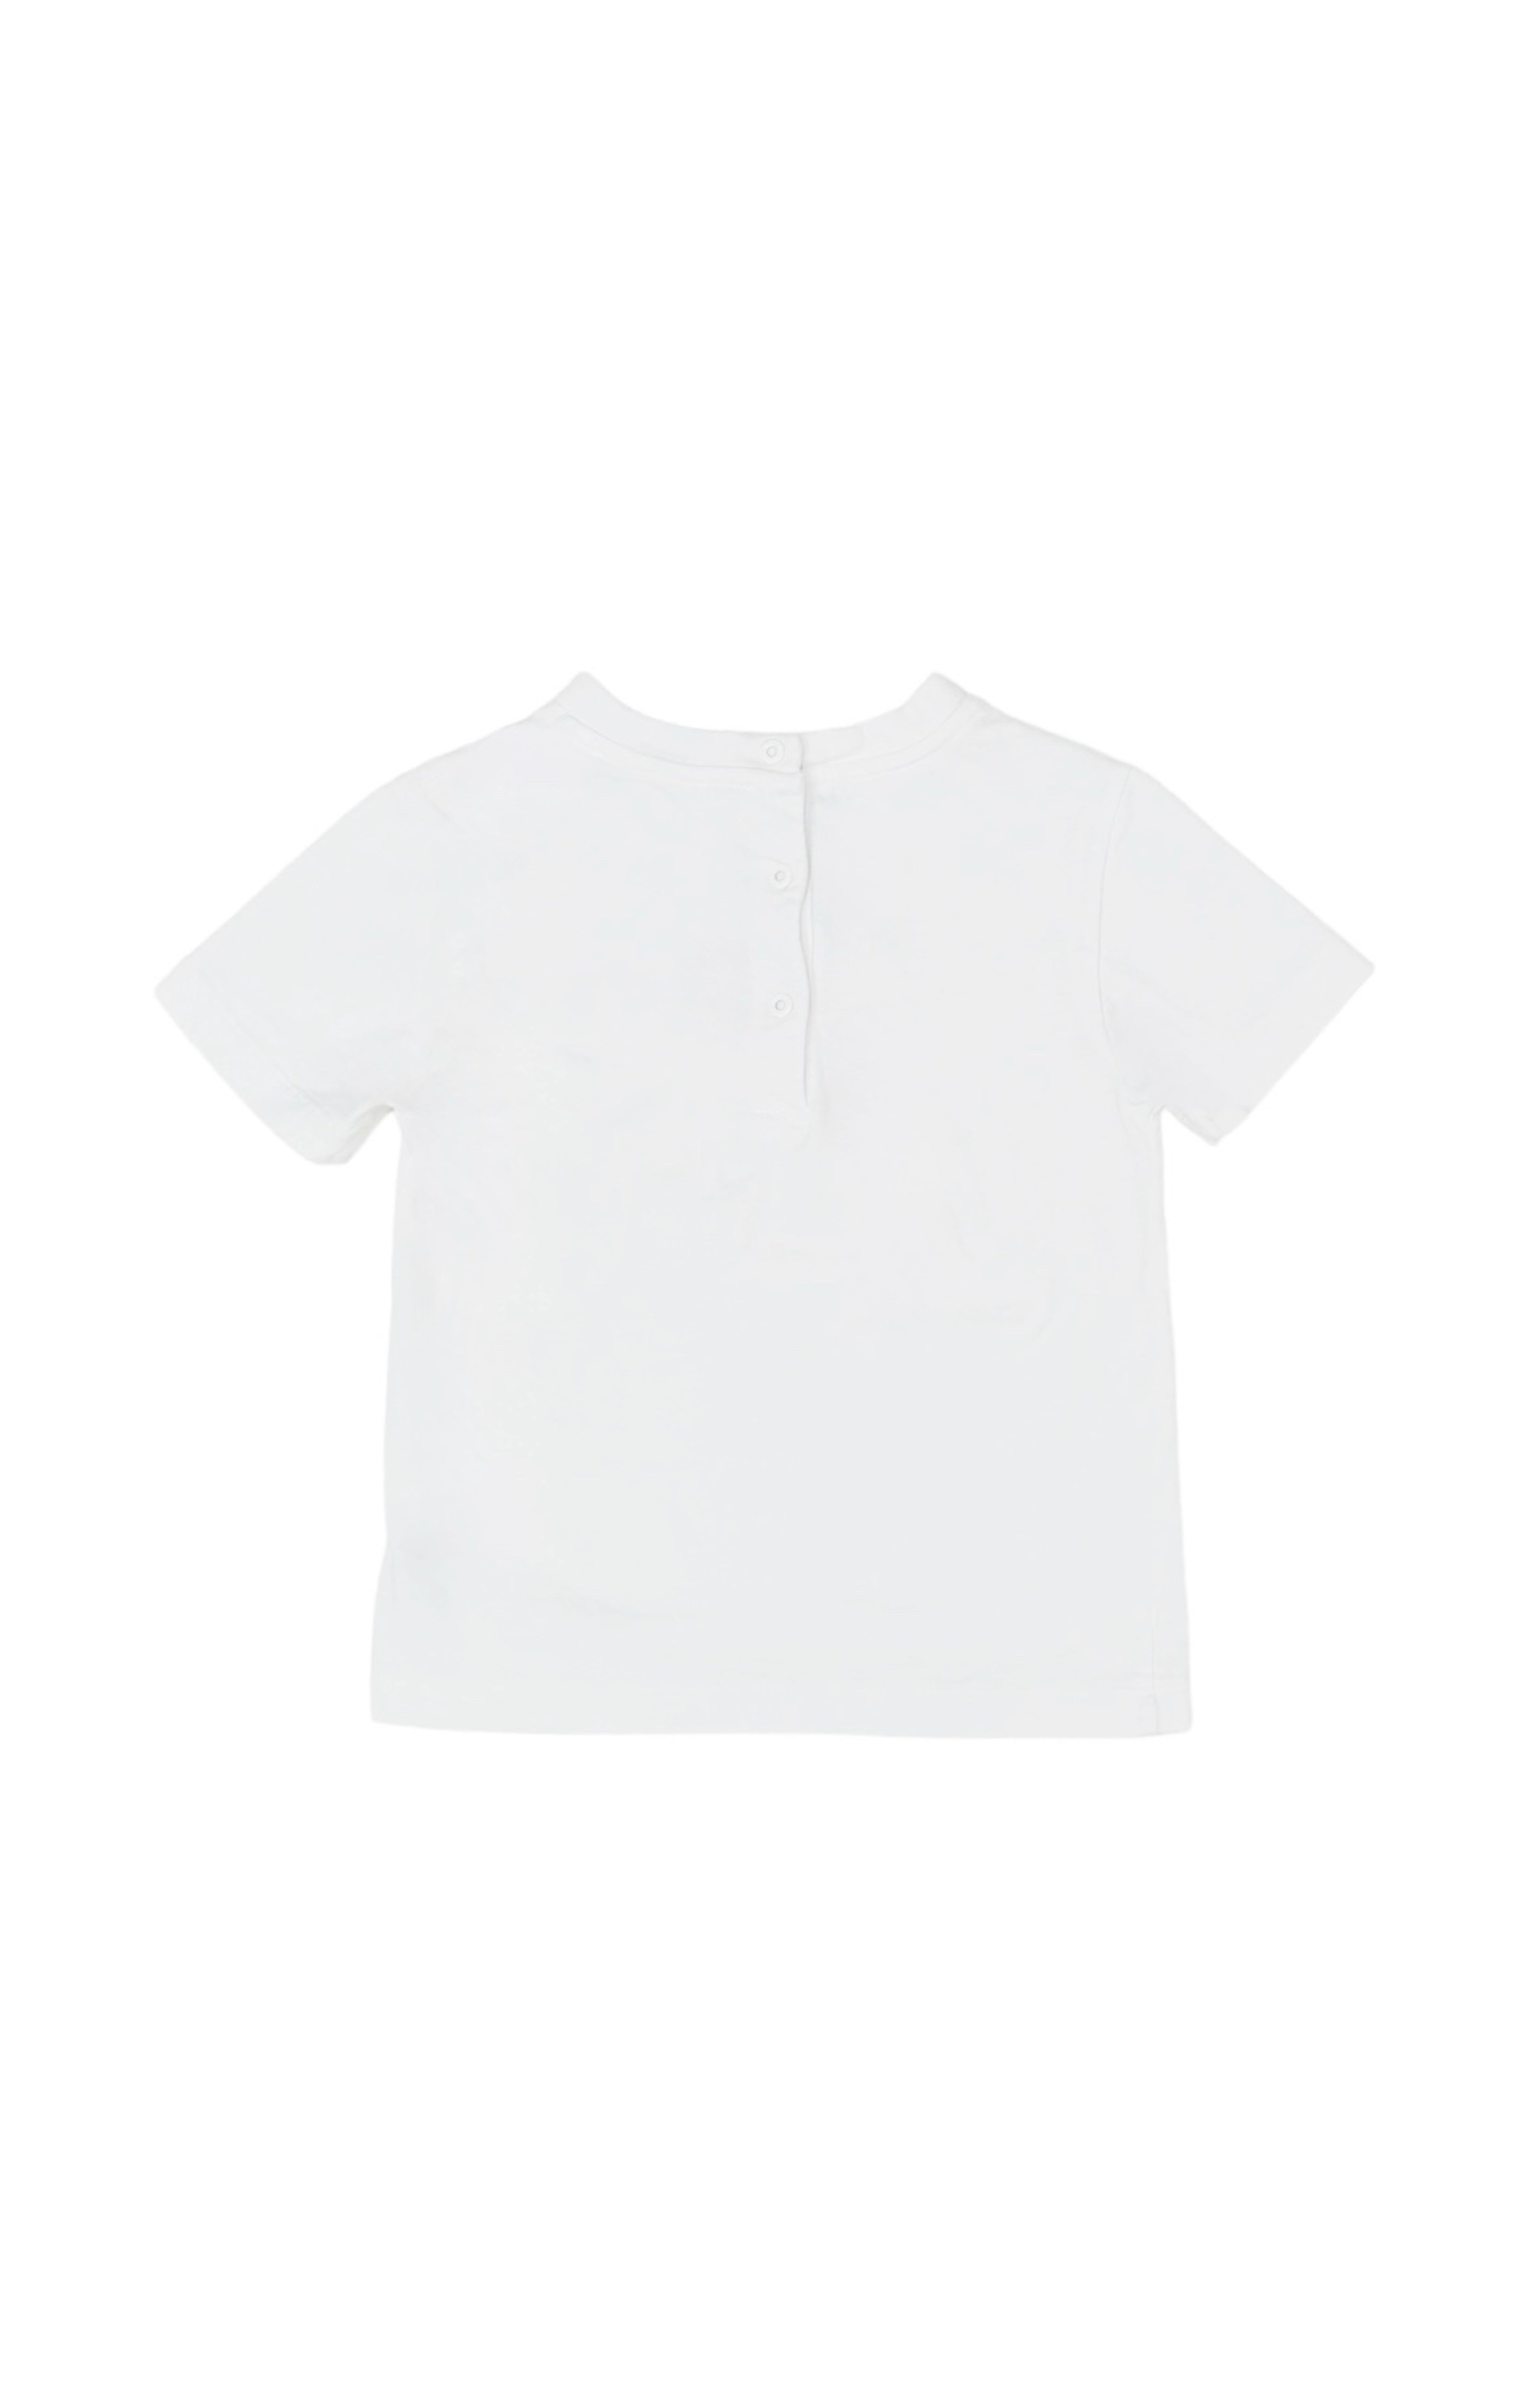 FENDI KIDS (RARE) T-Shirt Size: Infant 24 Months